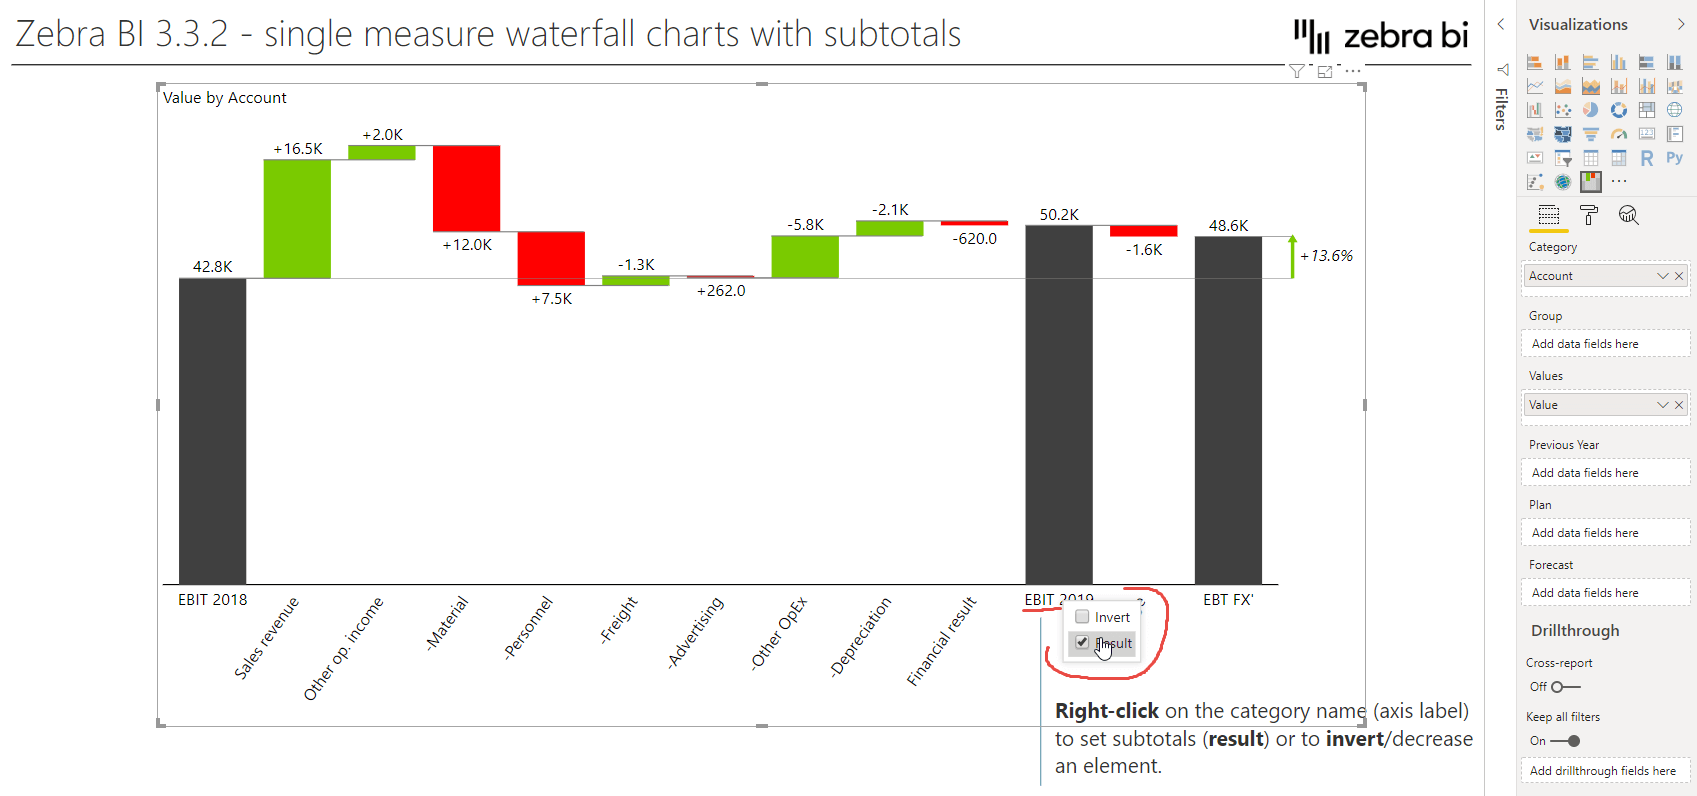 Data For Waterfall Chart